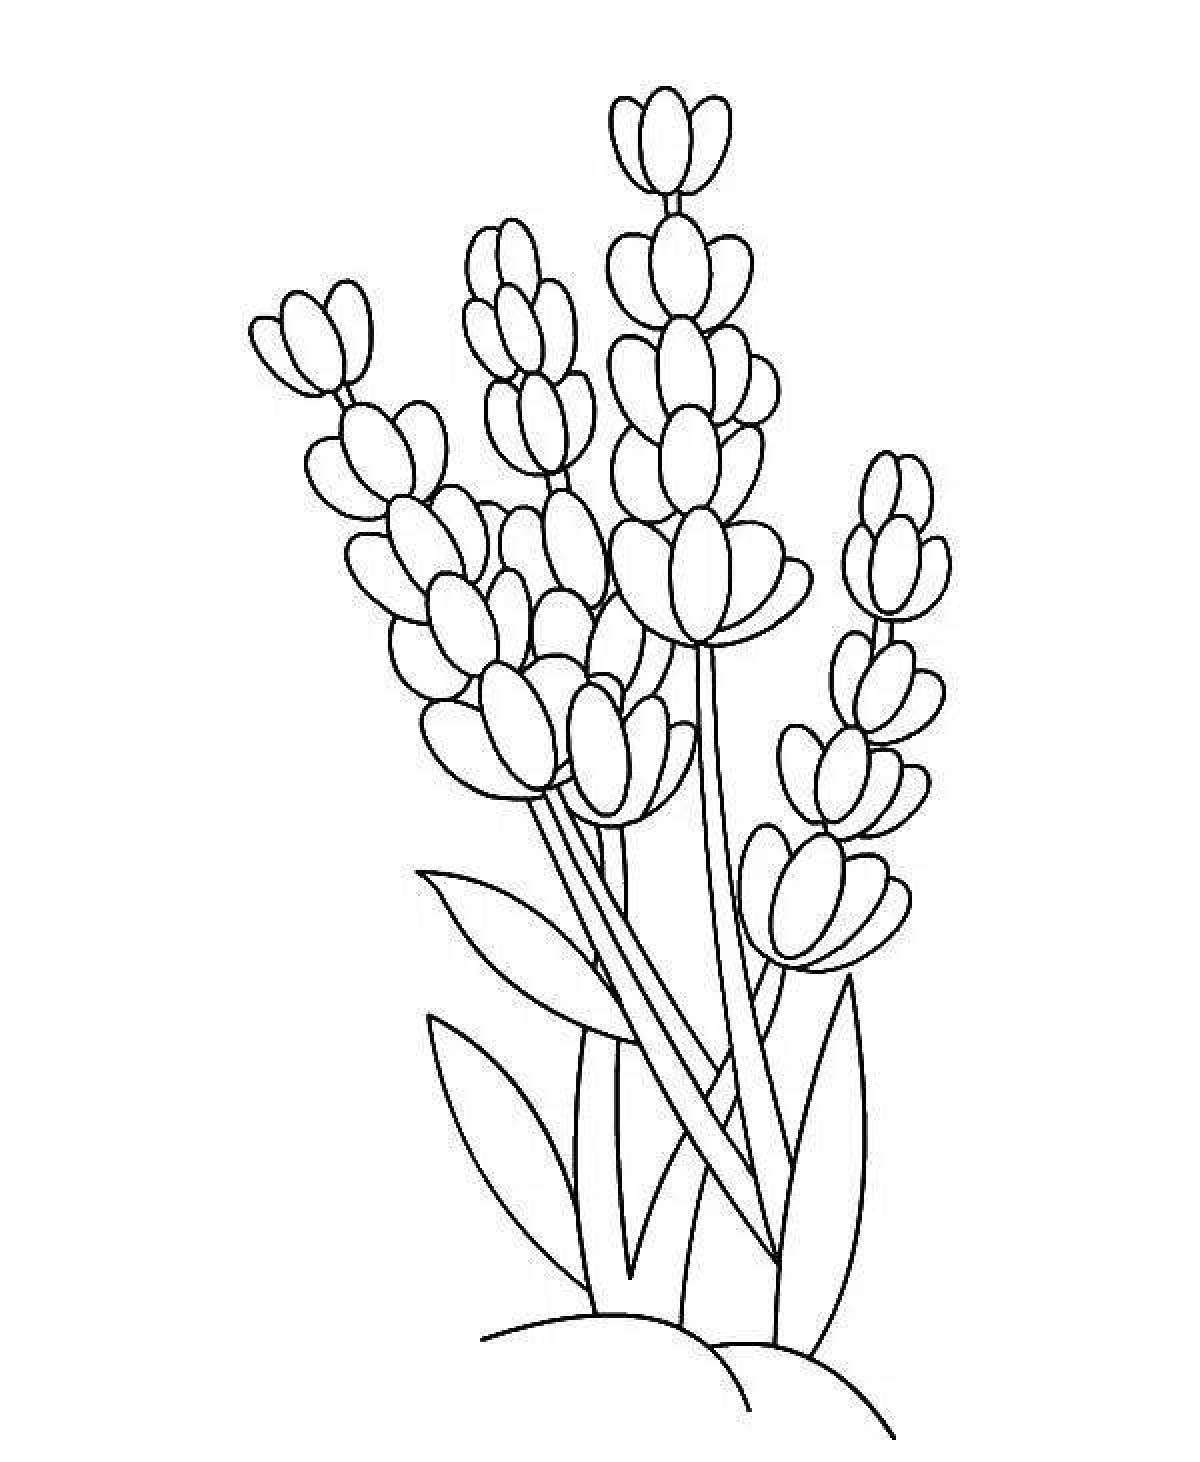 Inspirational lavender coloring book